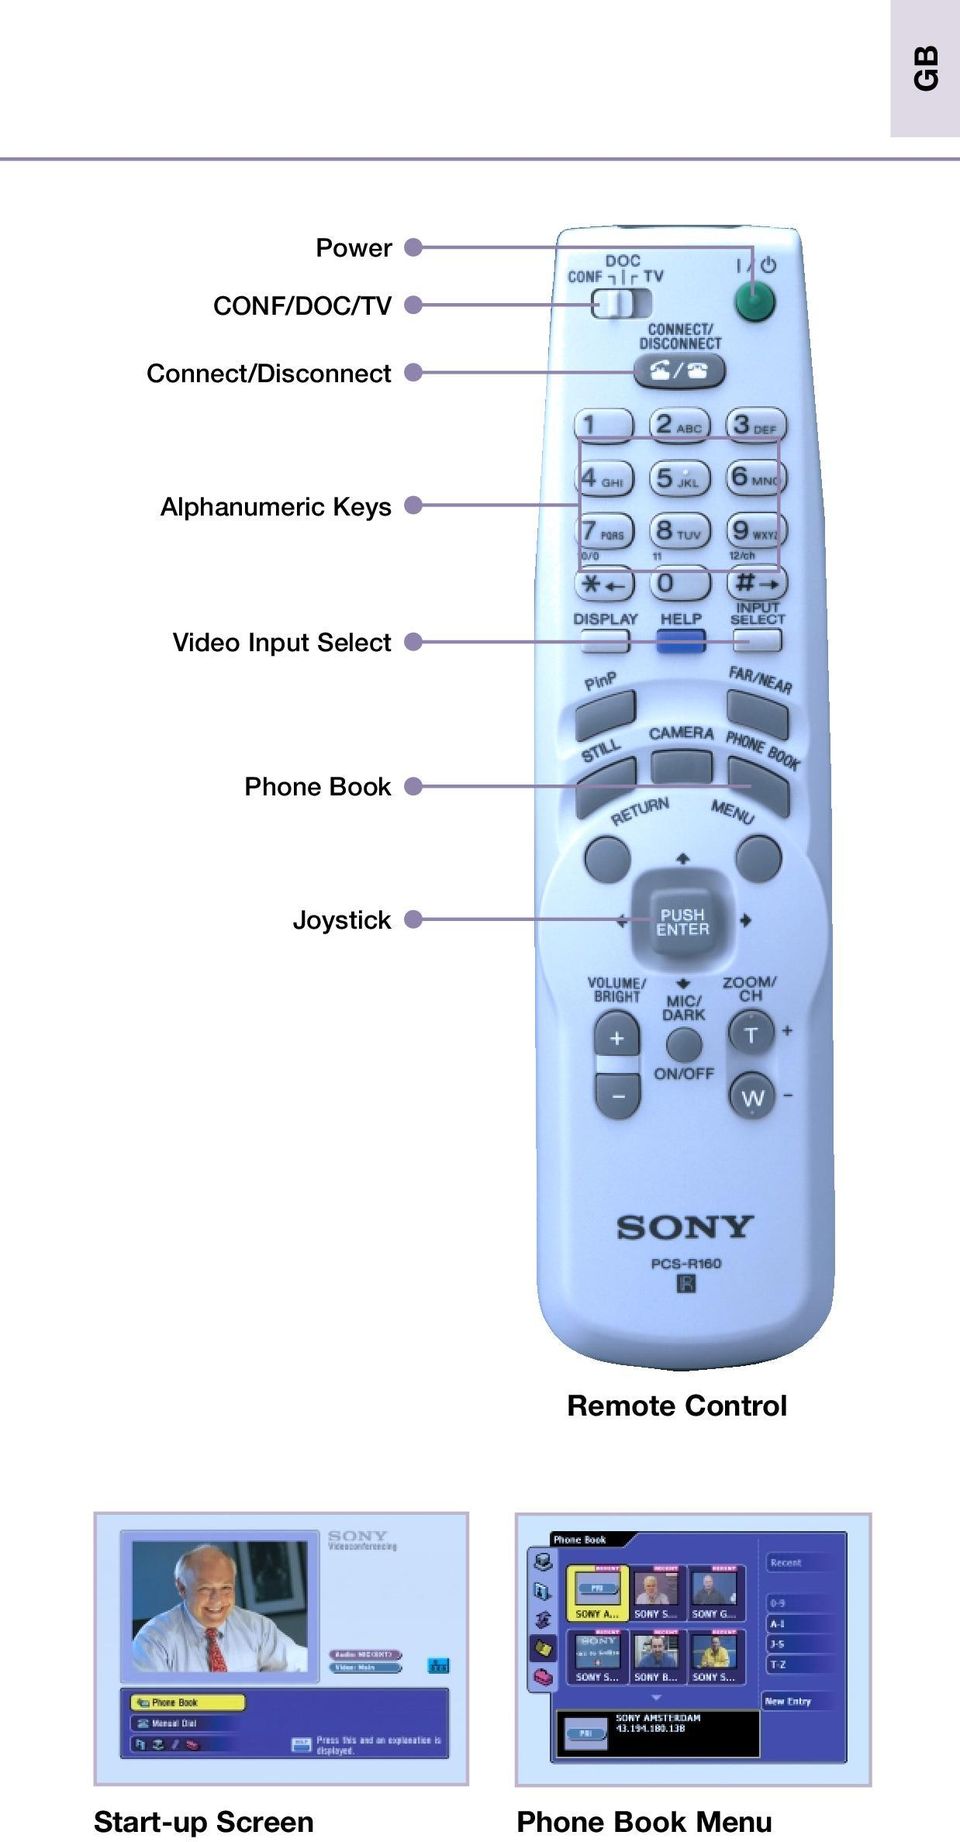 Keys Video Input Select Phone Book